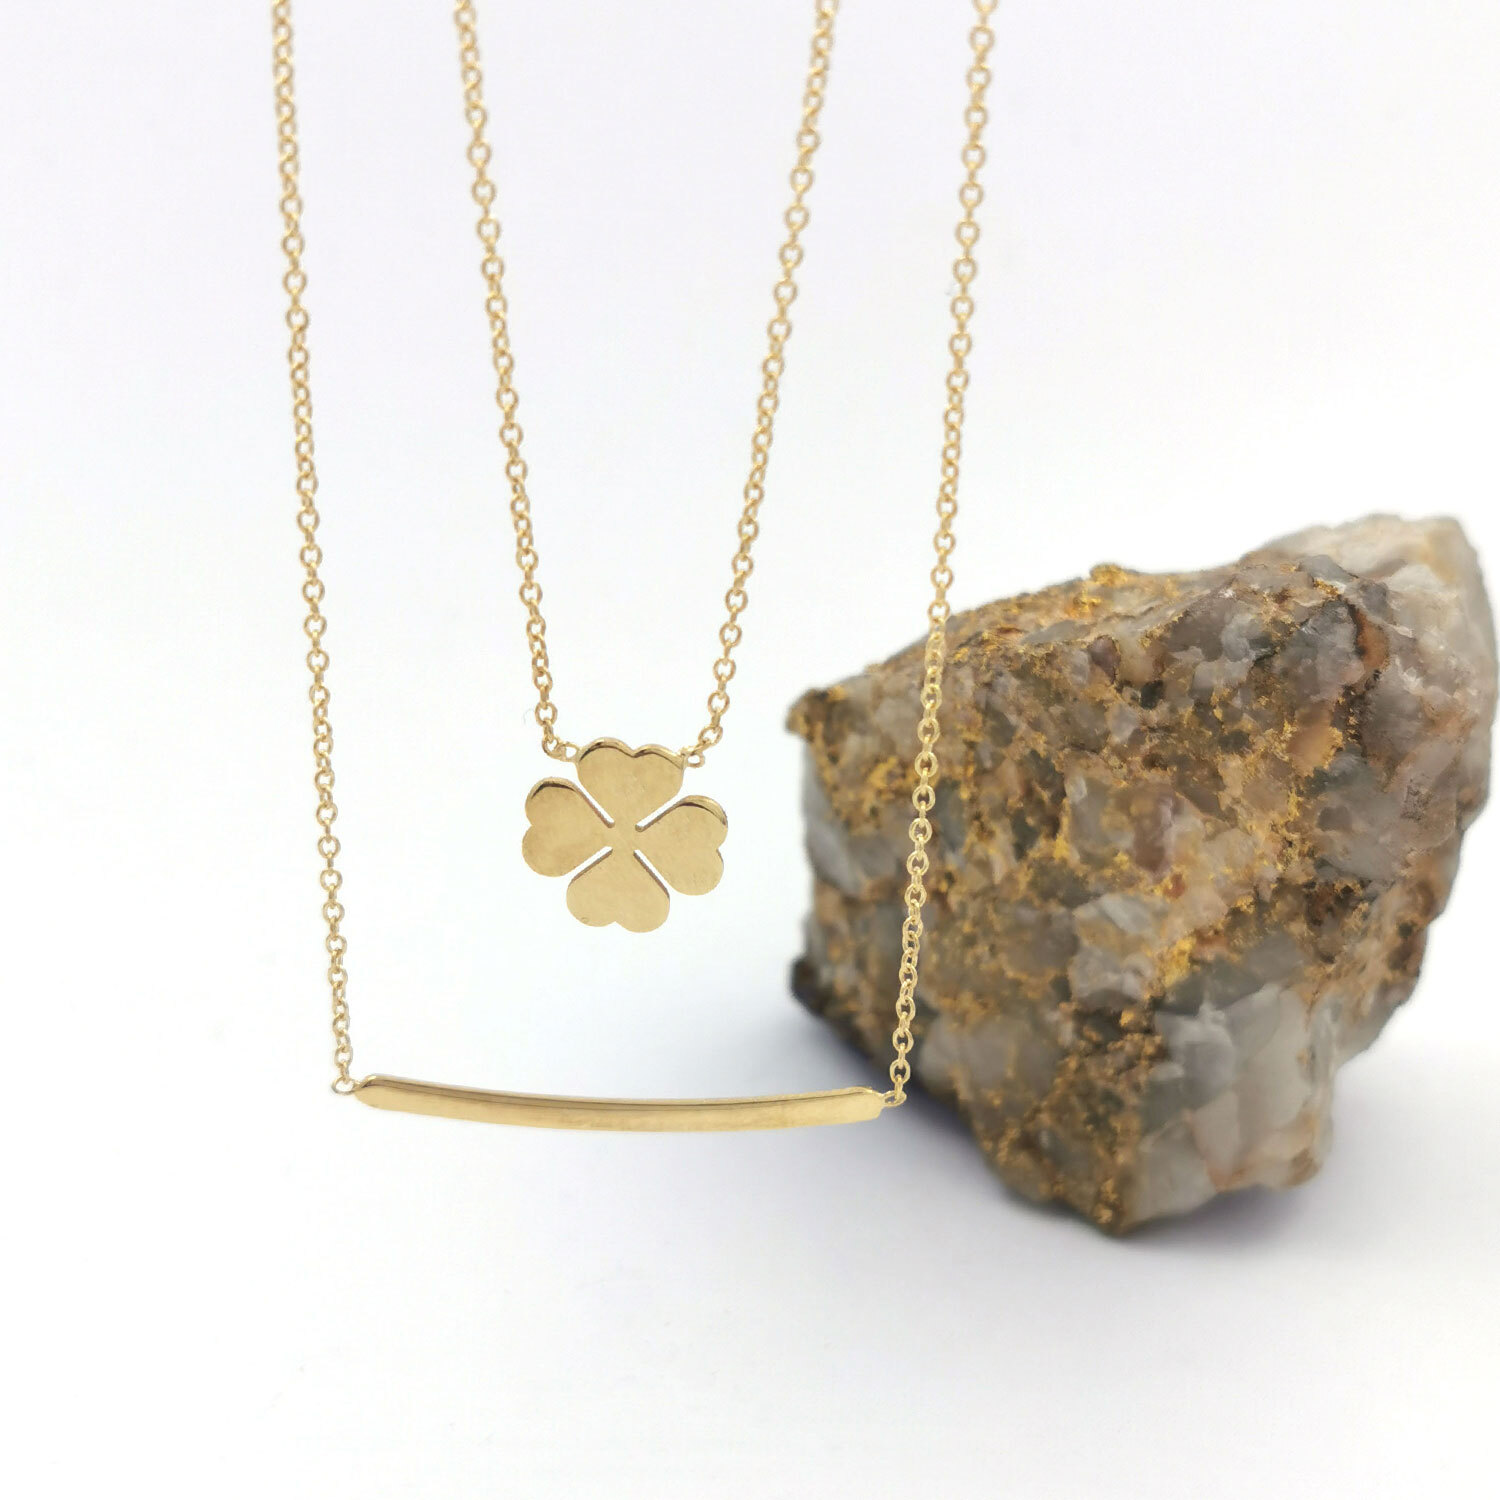 9ct Yellow Gold Diamond Kiss Pendant Necklace - London Road Jewellery